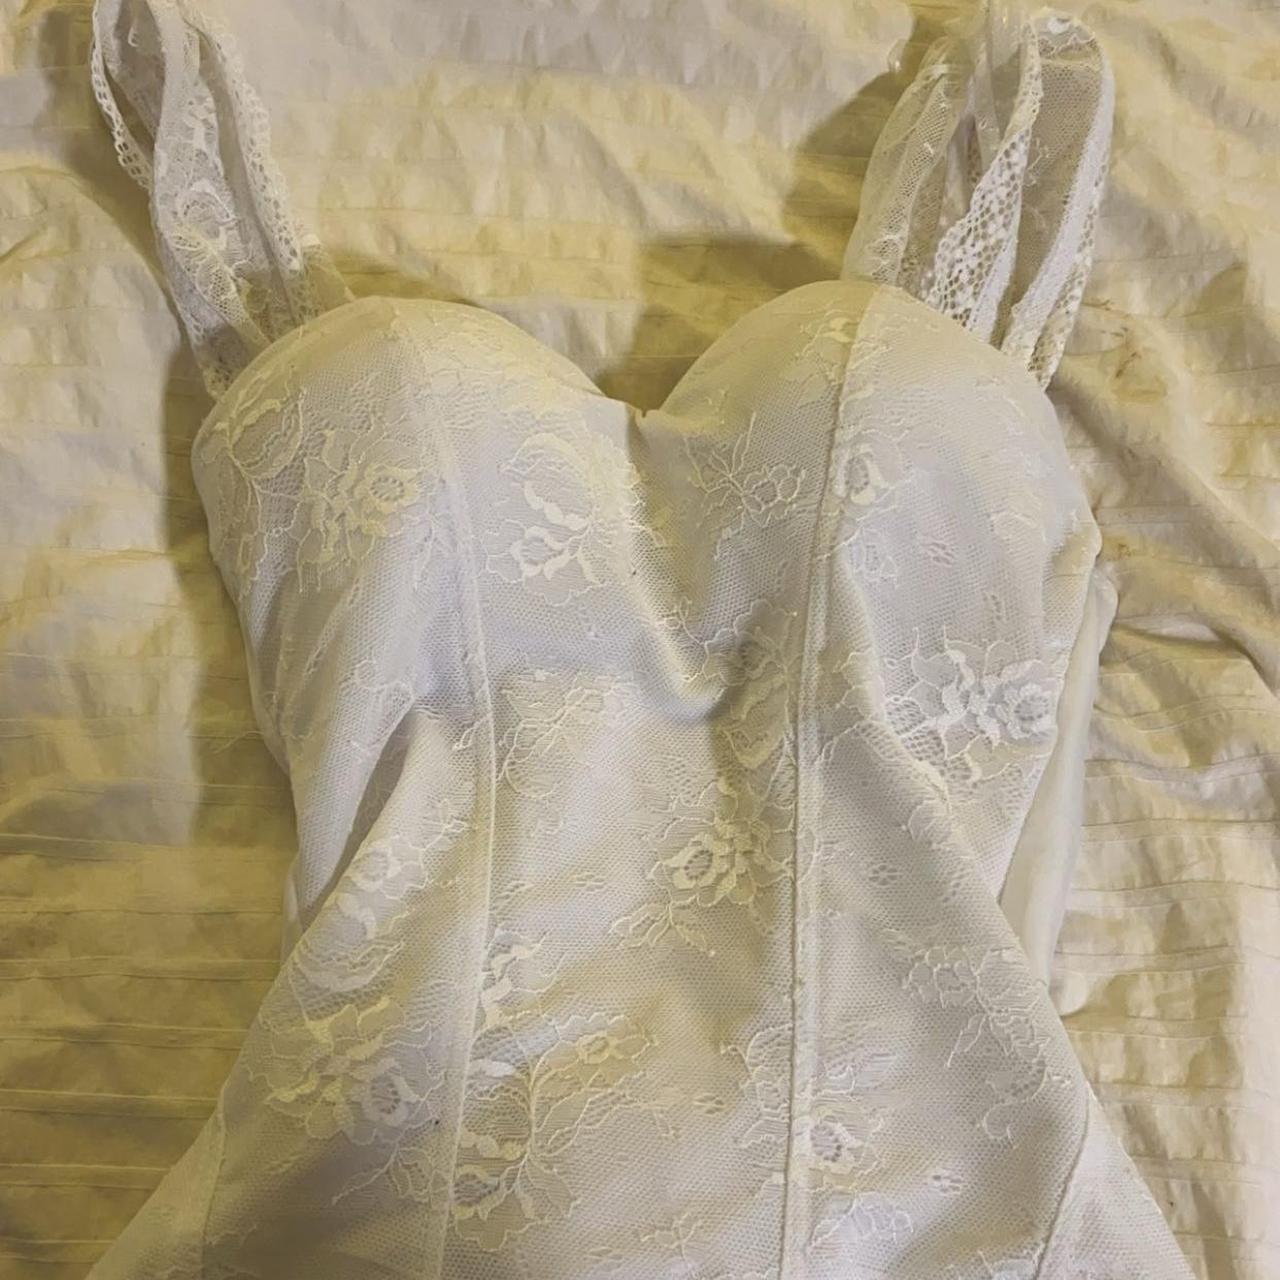 spirit Halloween white lace corset - Depop